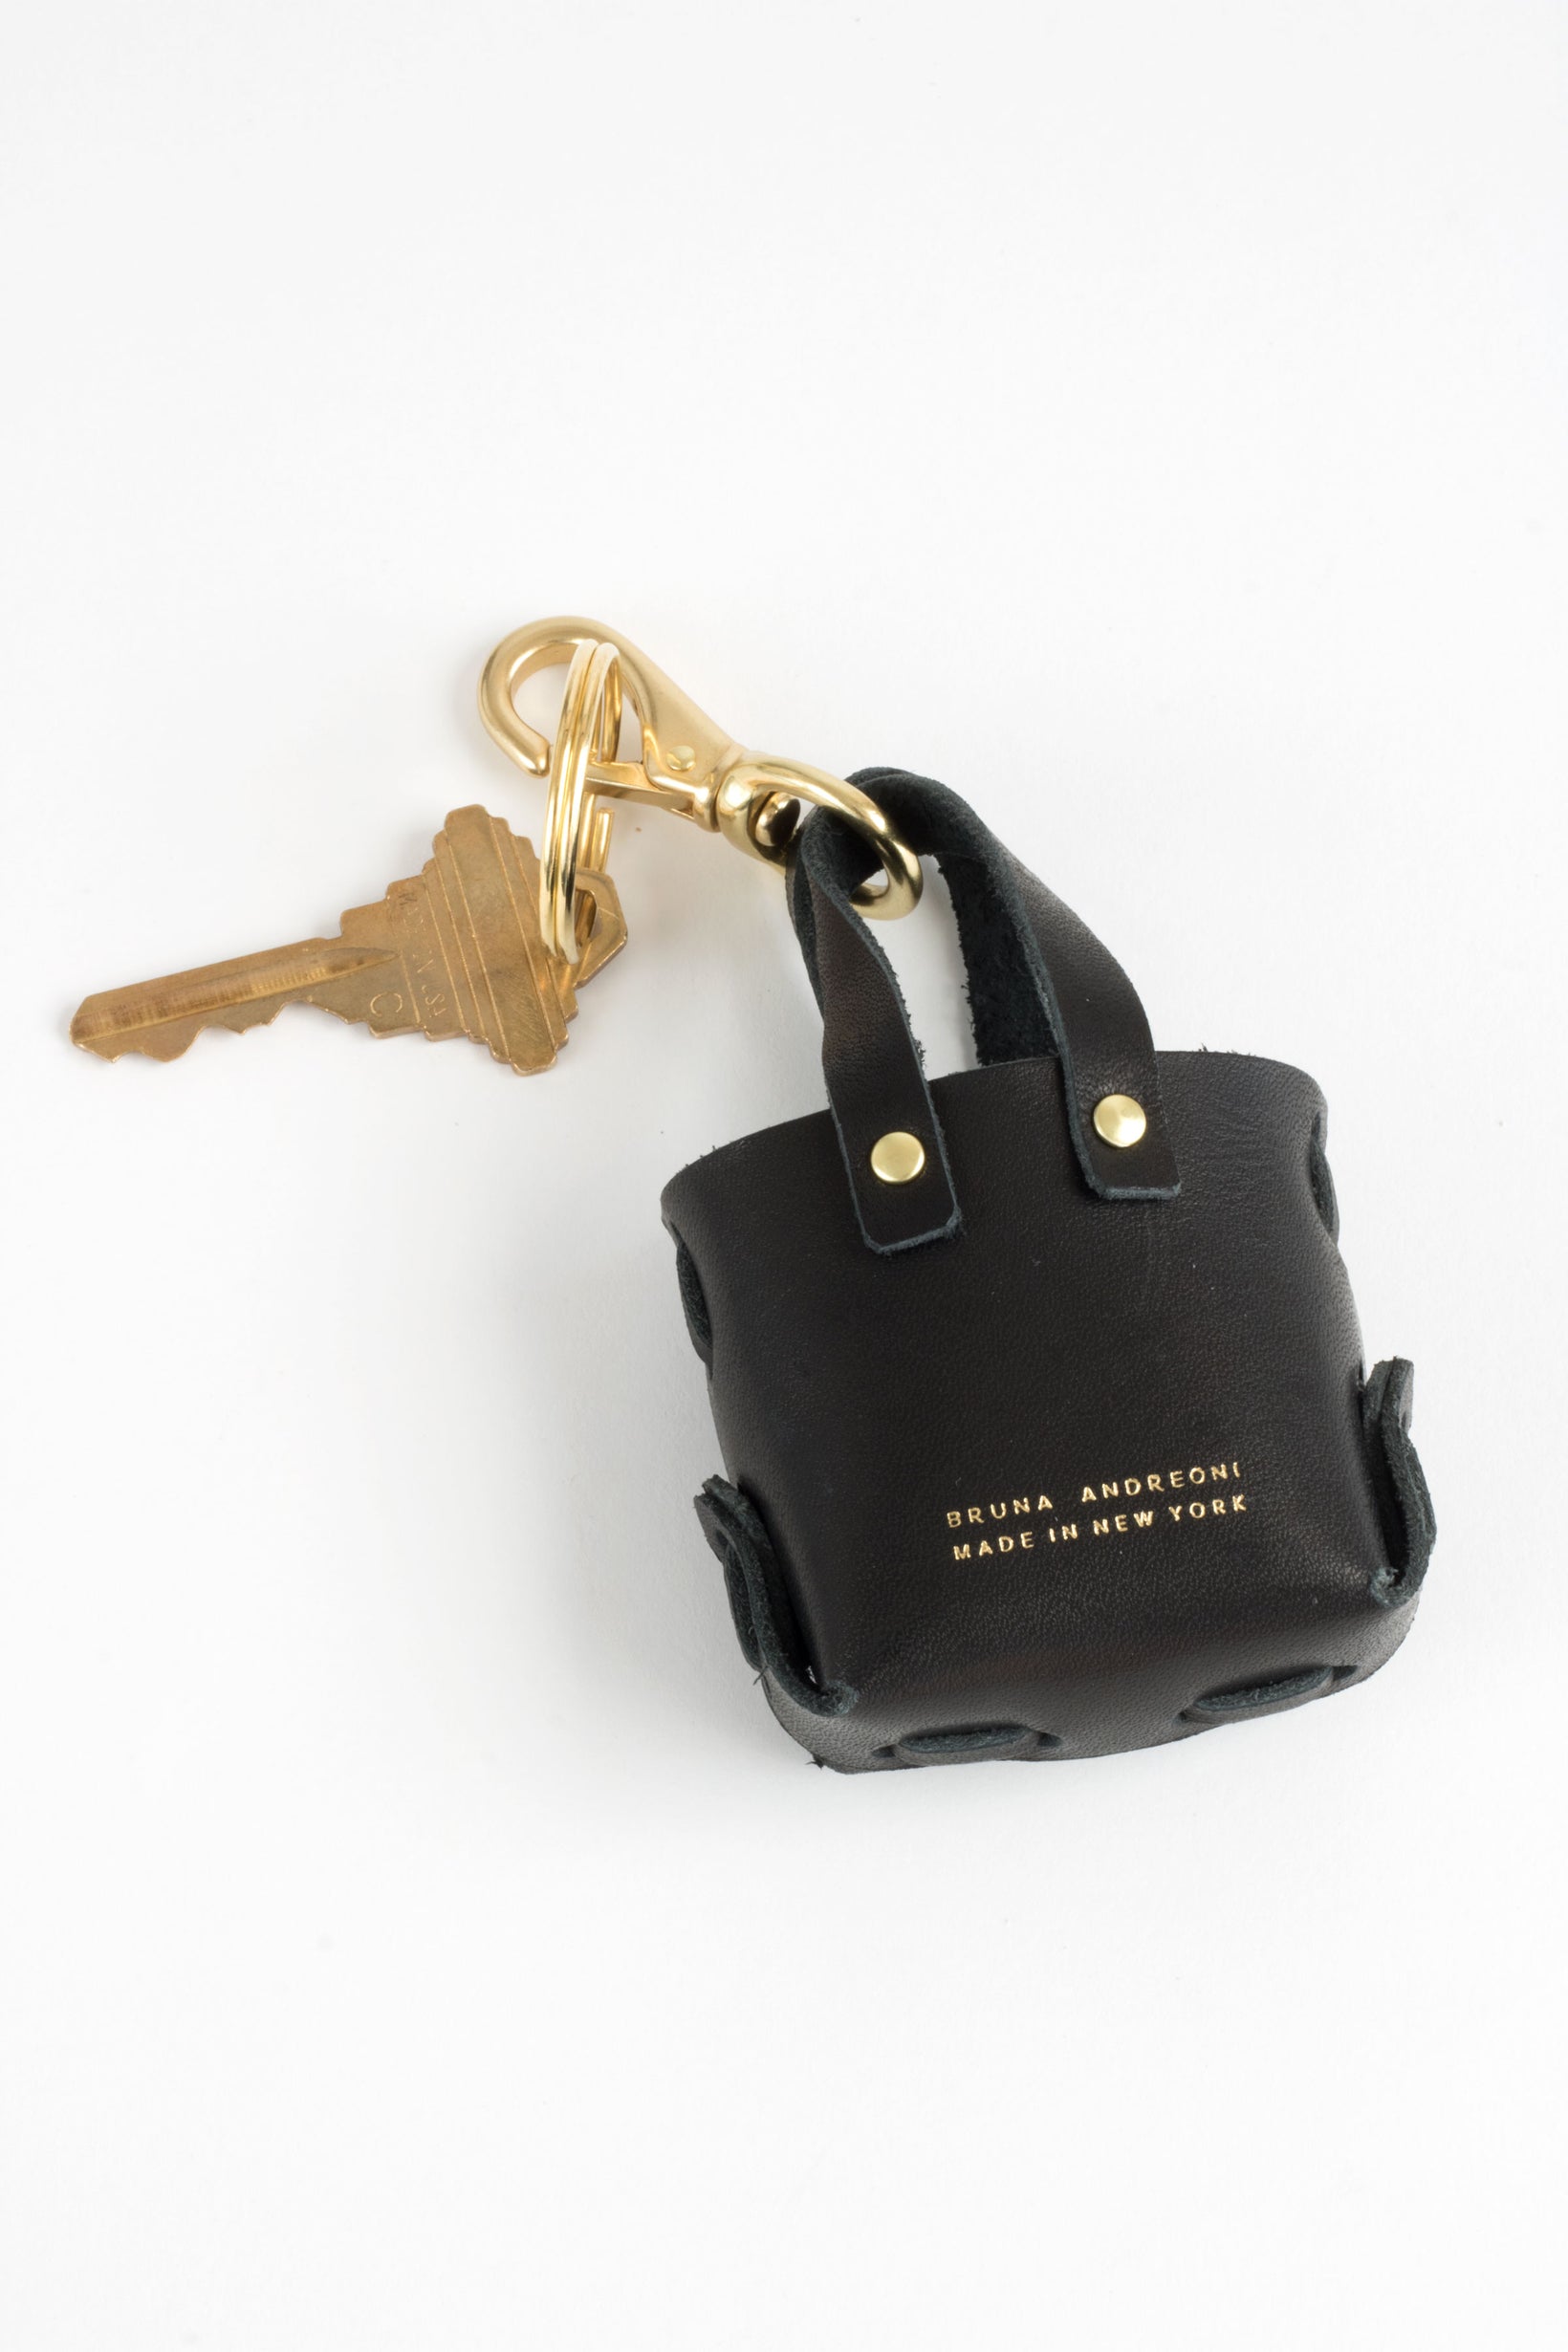 Bruna Andreoni Key Charm Black / Brass